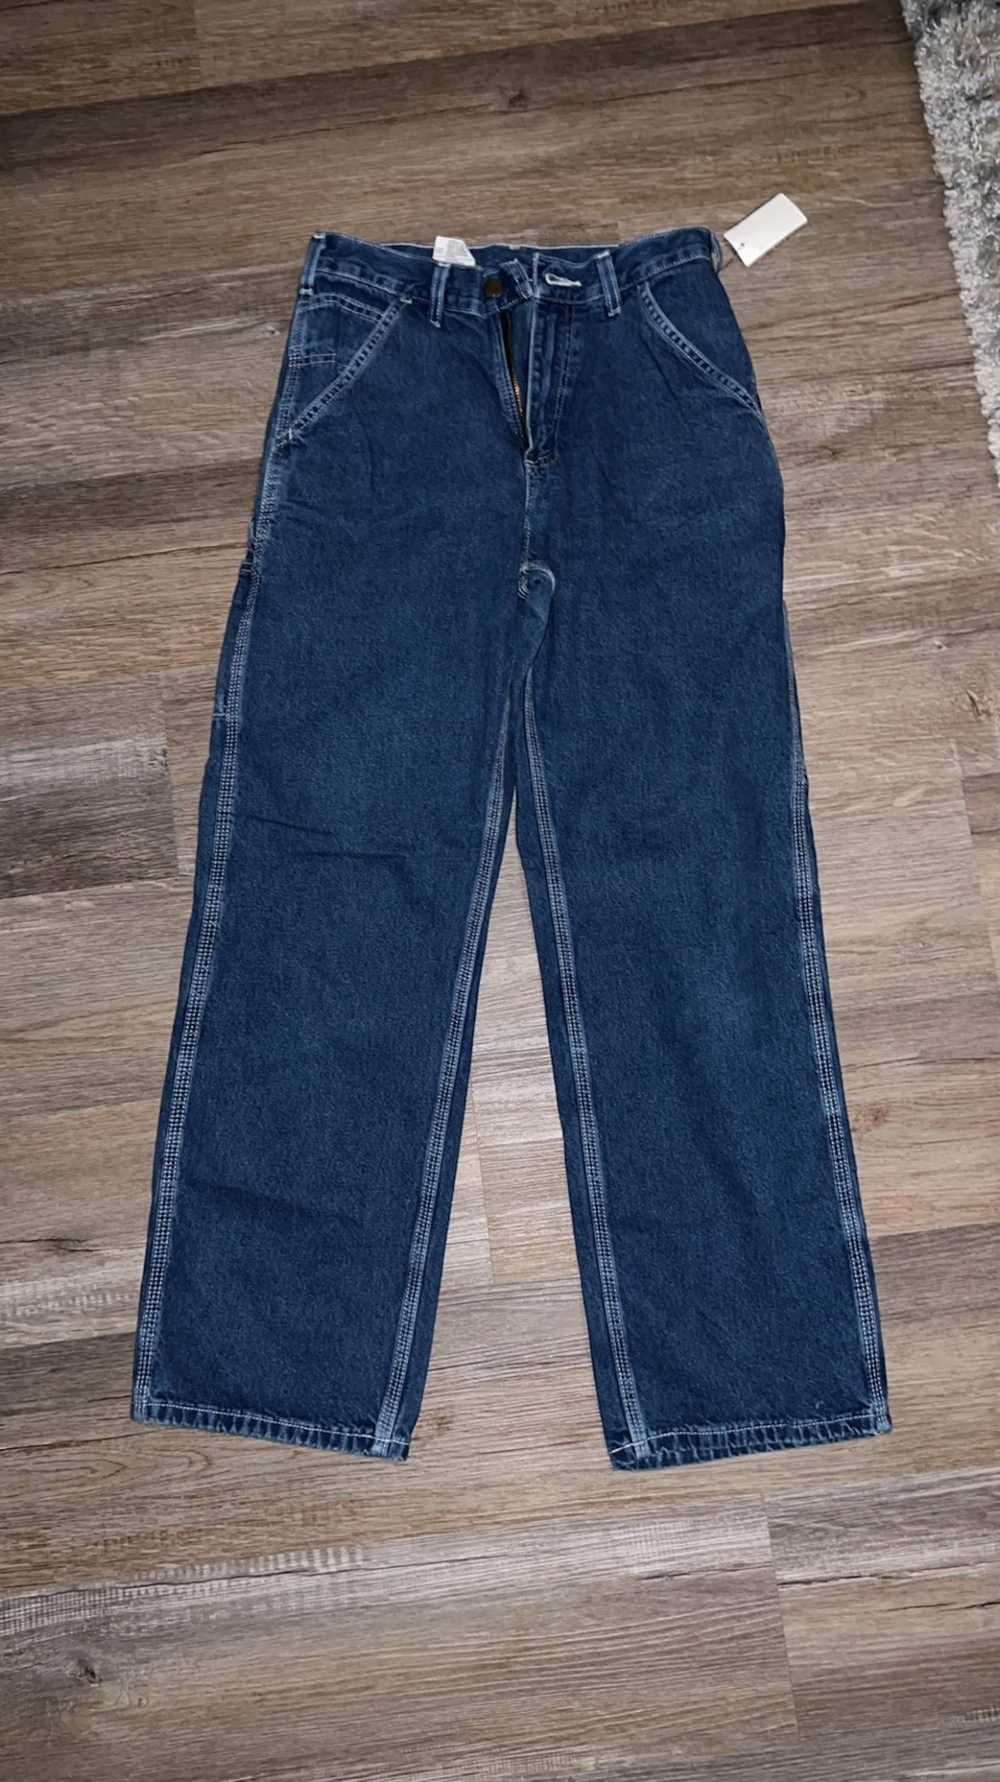 Carhartt Carhartt jeans 28x30 perfect - image 3